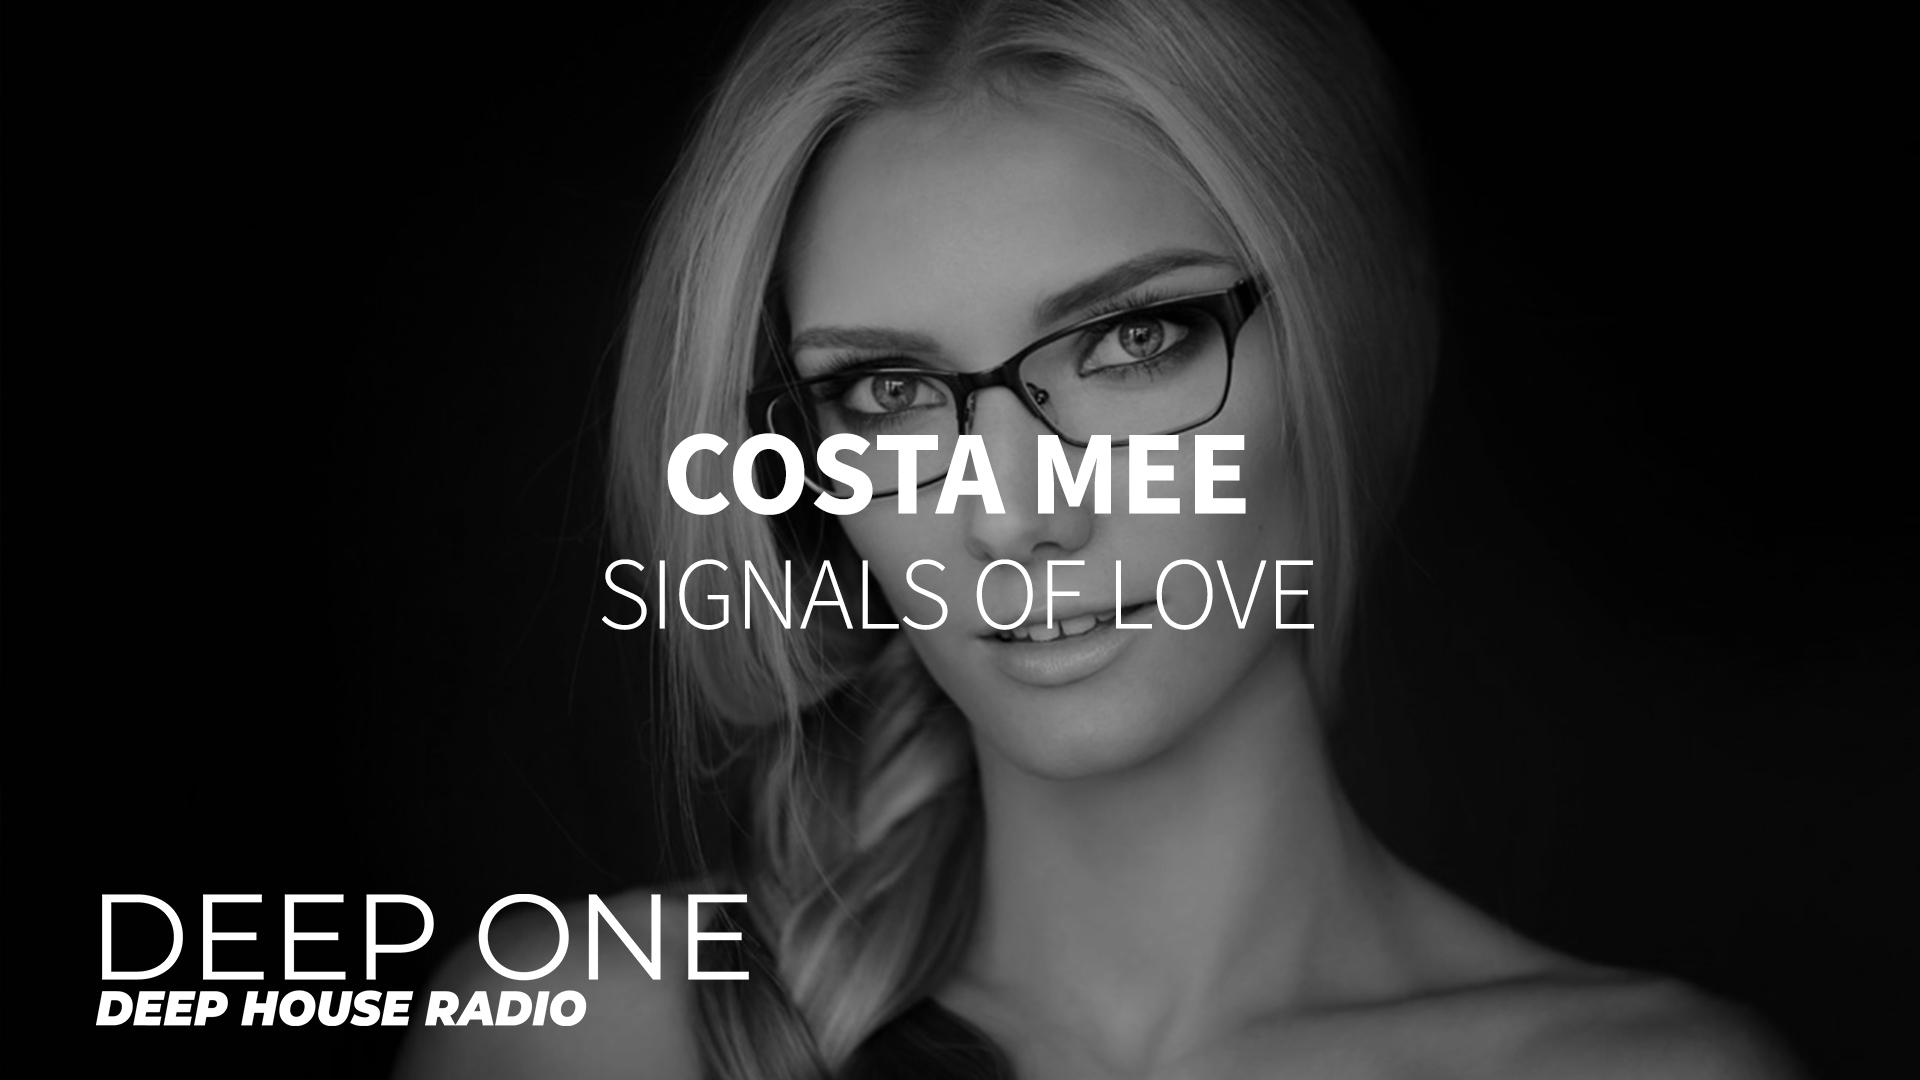 Costa mee mix. Costa mee фото. Costa mee Signals of Love. Радио Deep one. "Costa mee" && ( исполнитель | группа | музыка | Music | Band | artist ) && (фото | photo).